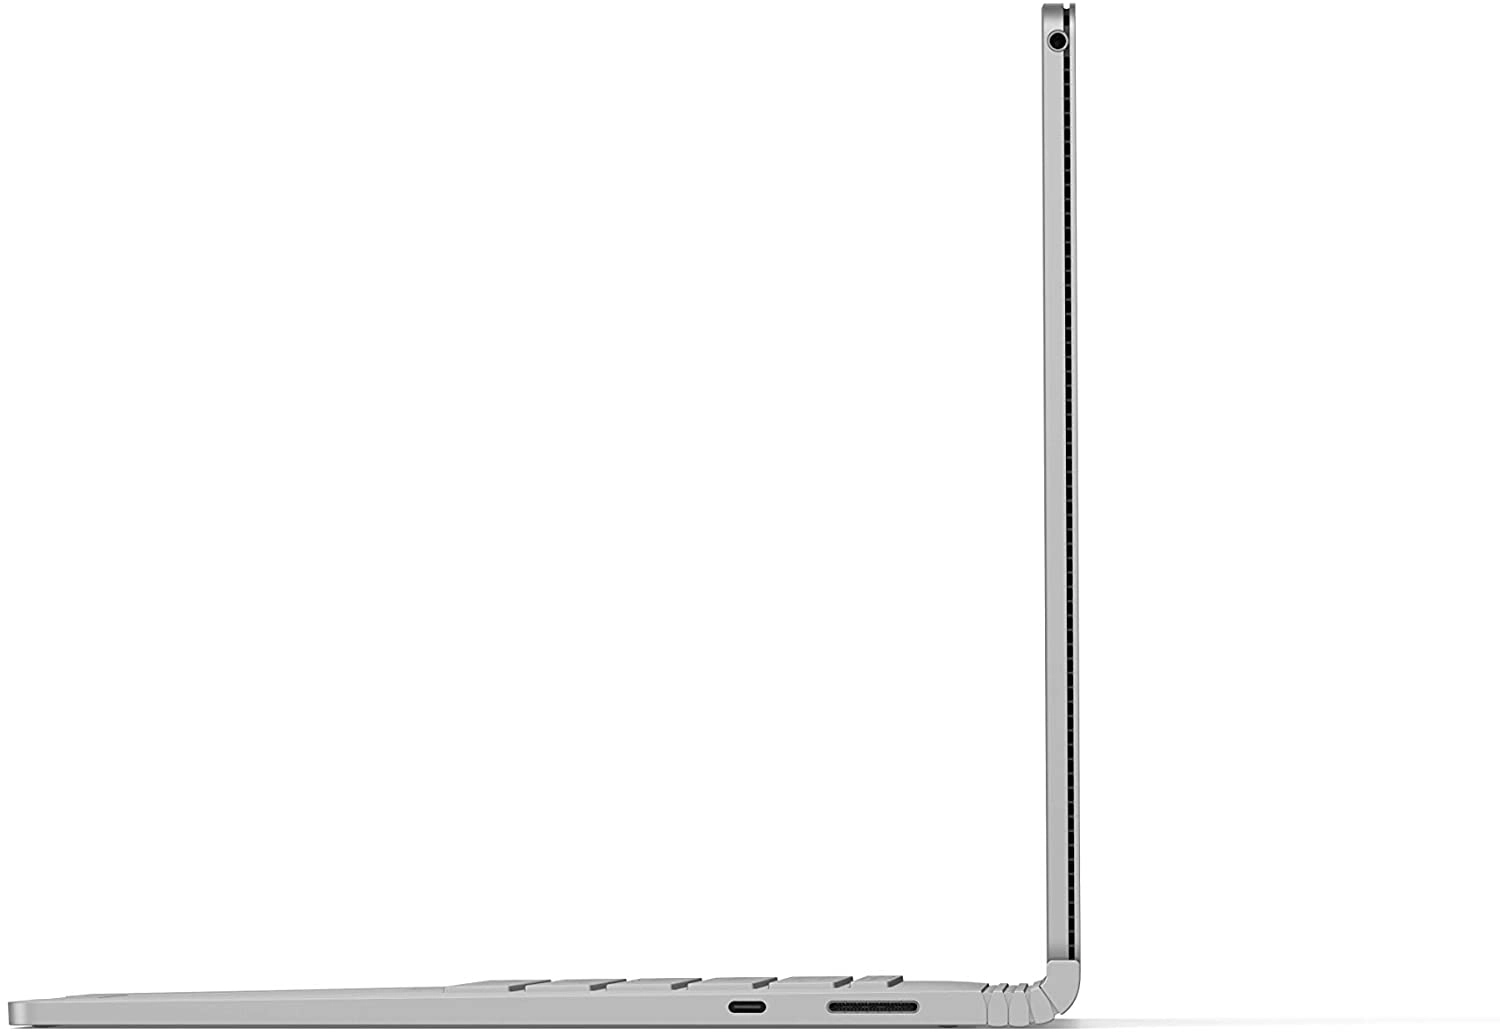 Microsoft Surface Book 3 laptop image